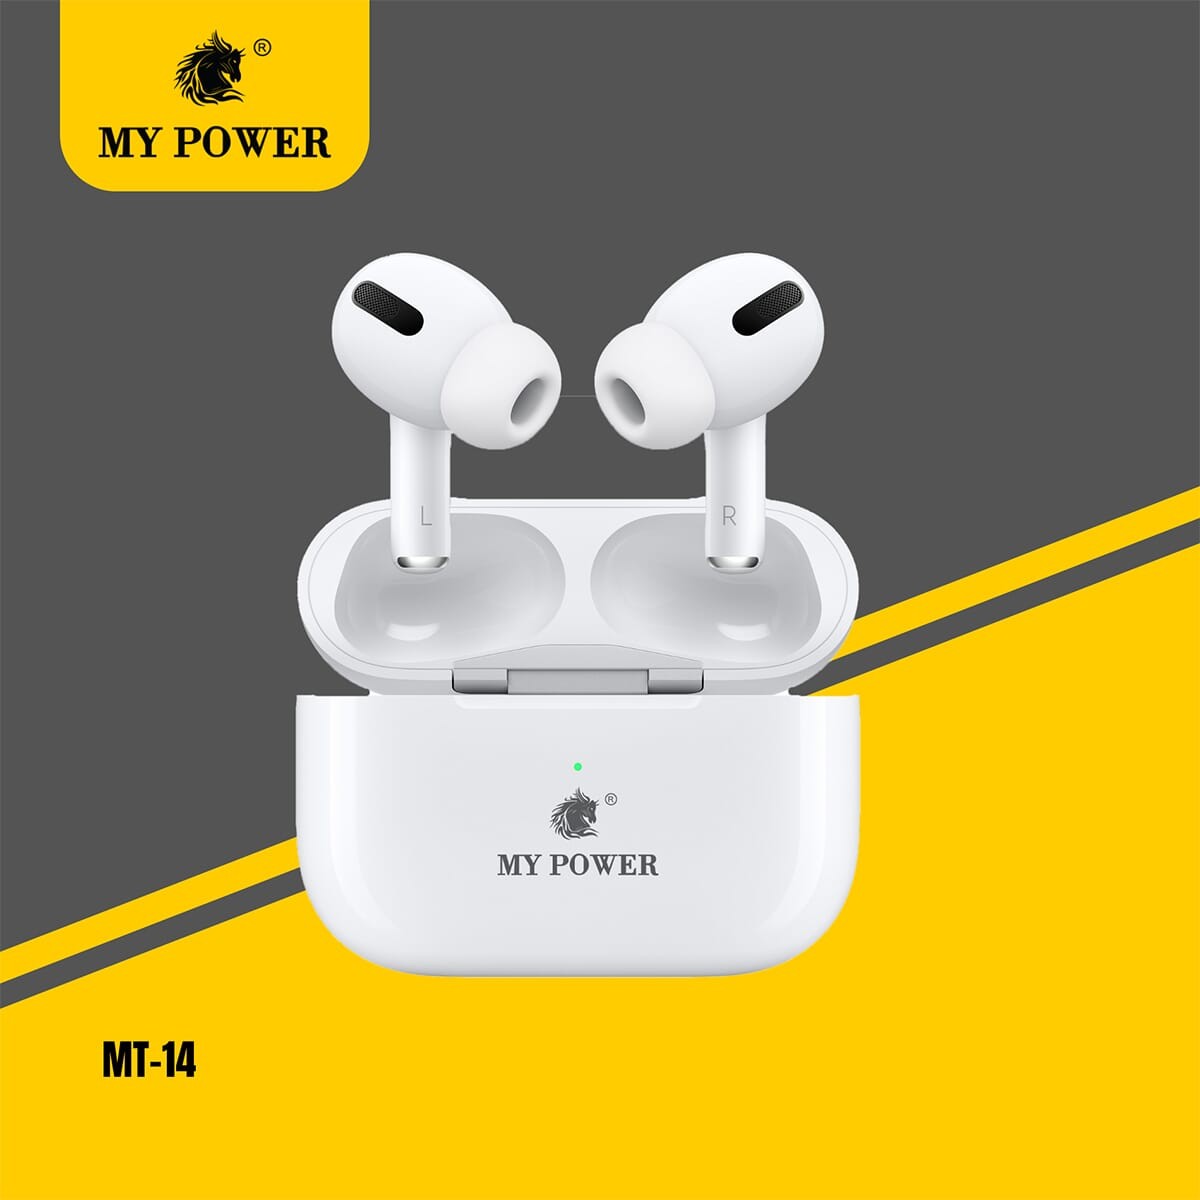 Mypower wireless Earbuds Best quality Highbase Bluetooth Handsfree earpods pro Mt14 for all device.